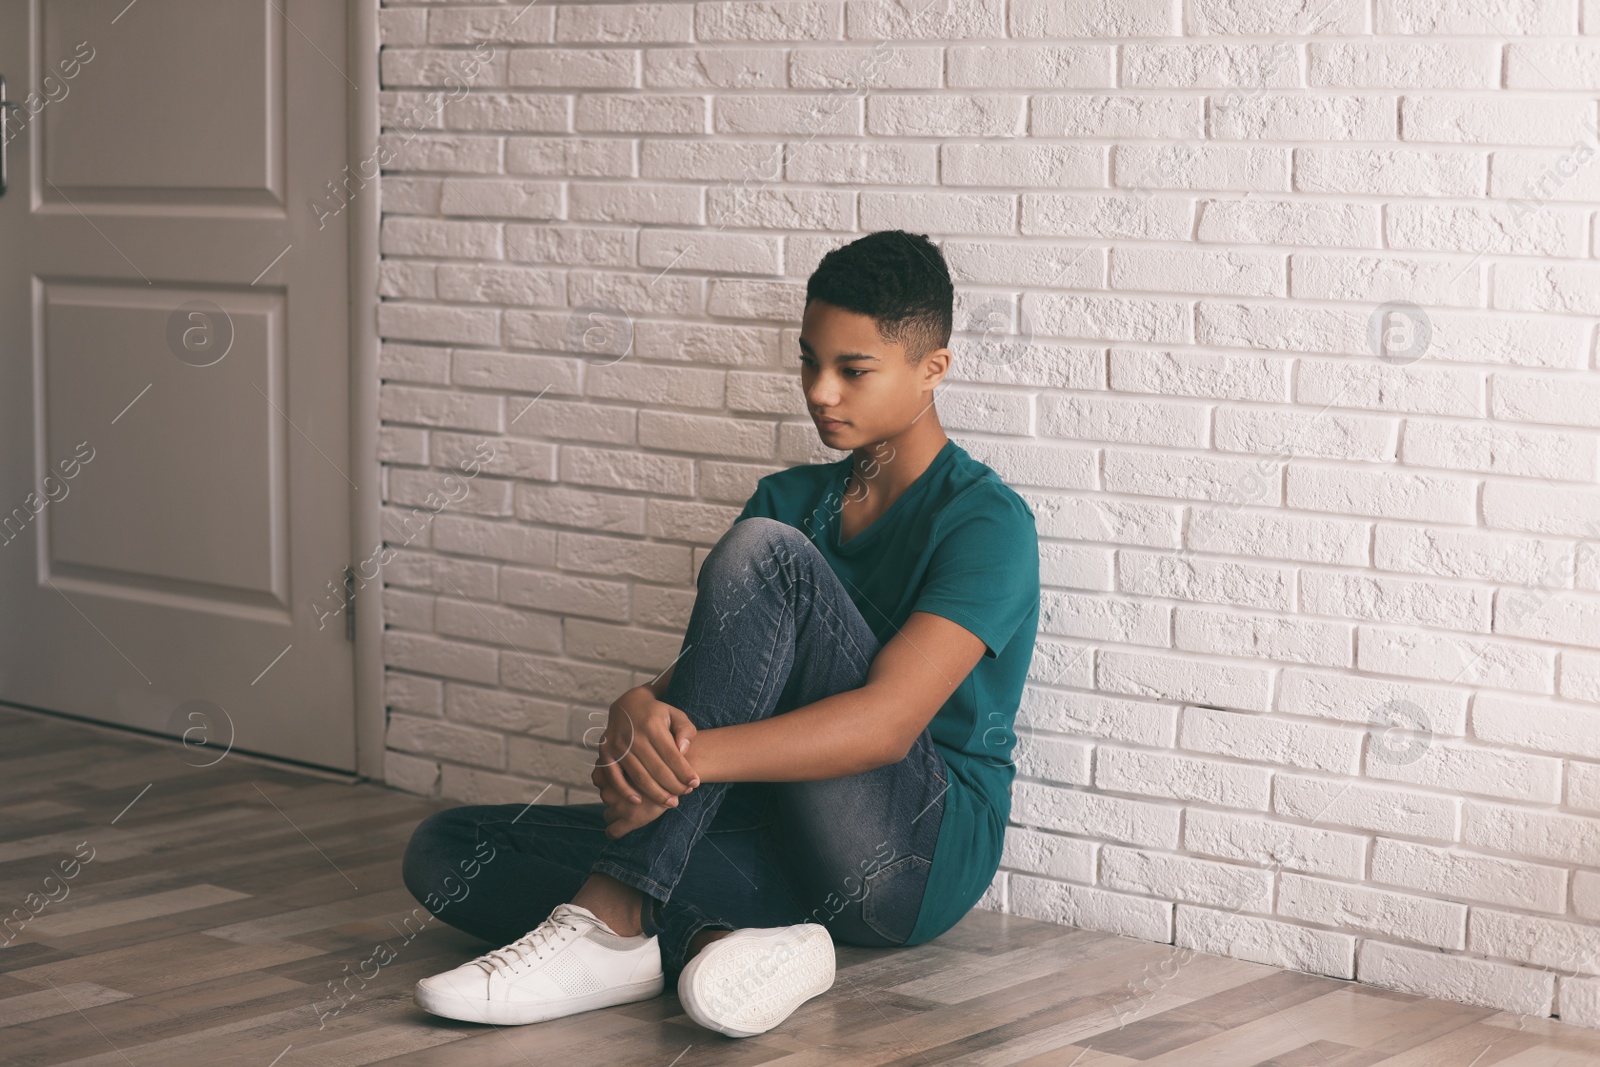 Photo of Upset African-American teenage boy sitting alone on floor near wall